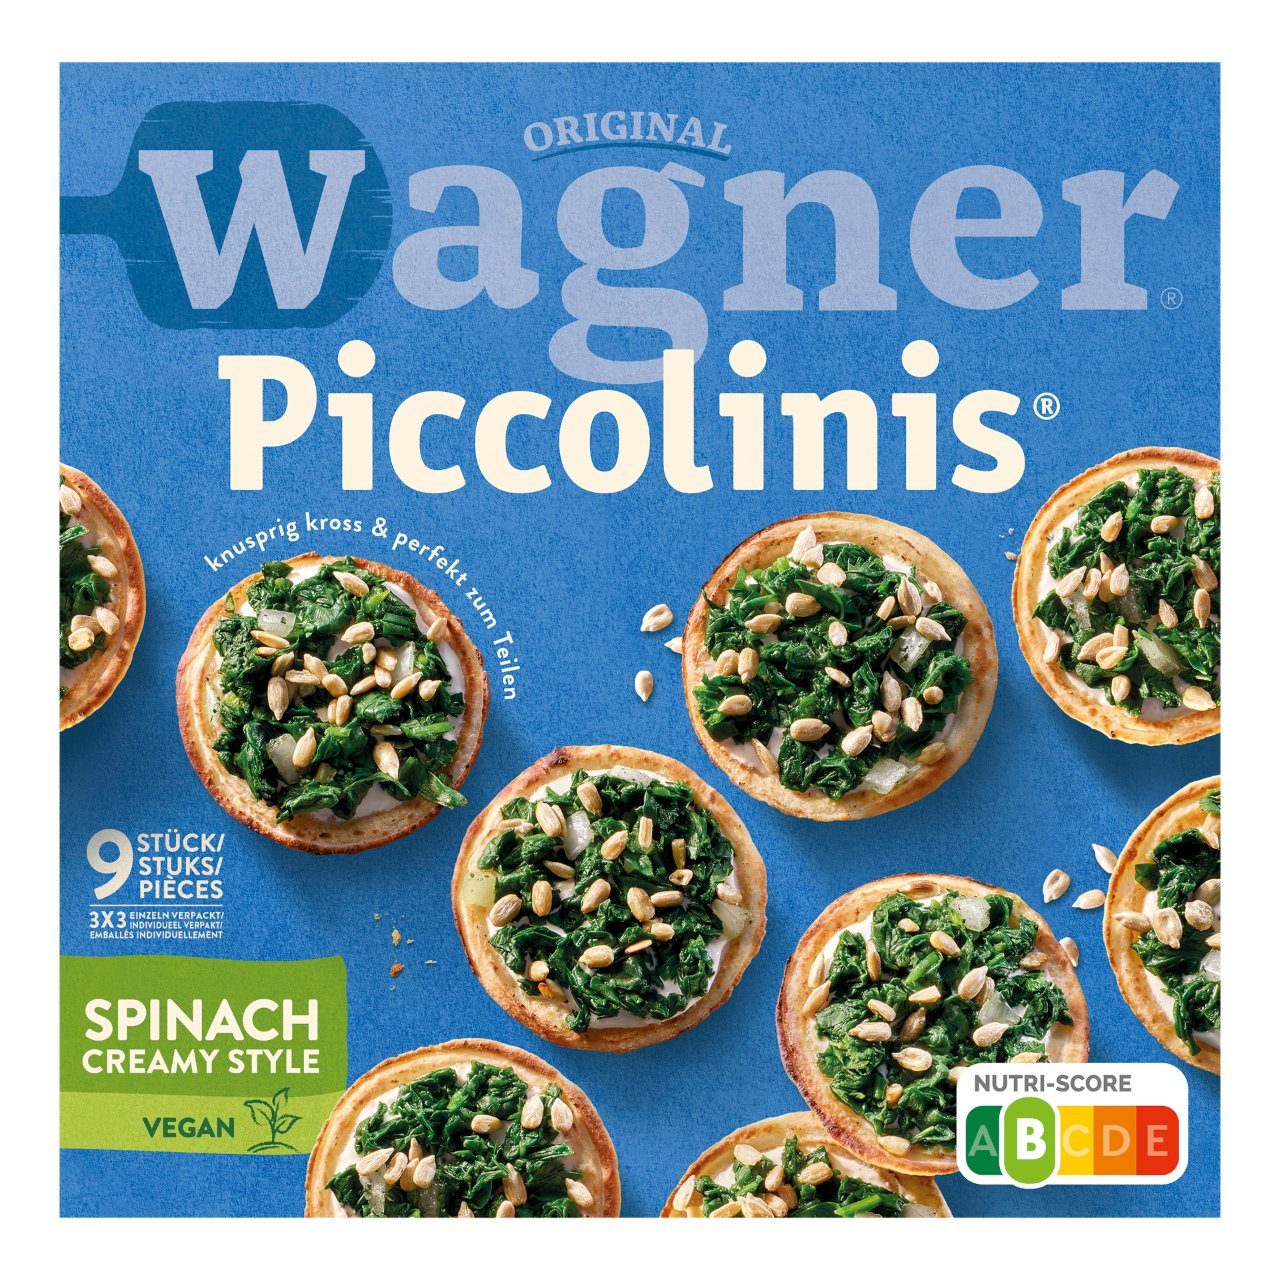 Piccolinis spinach creamy style